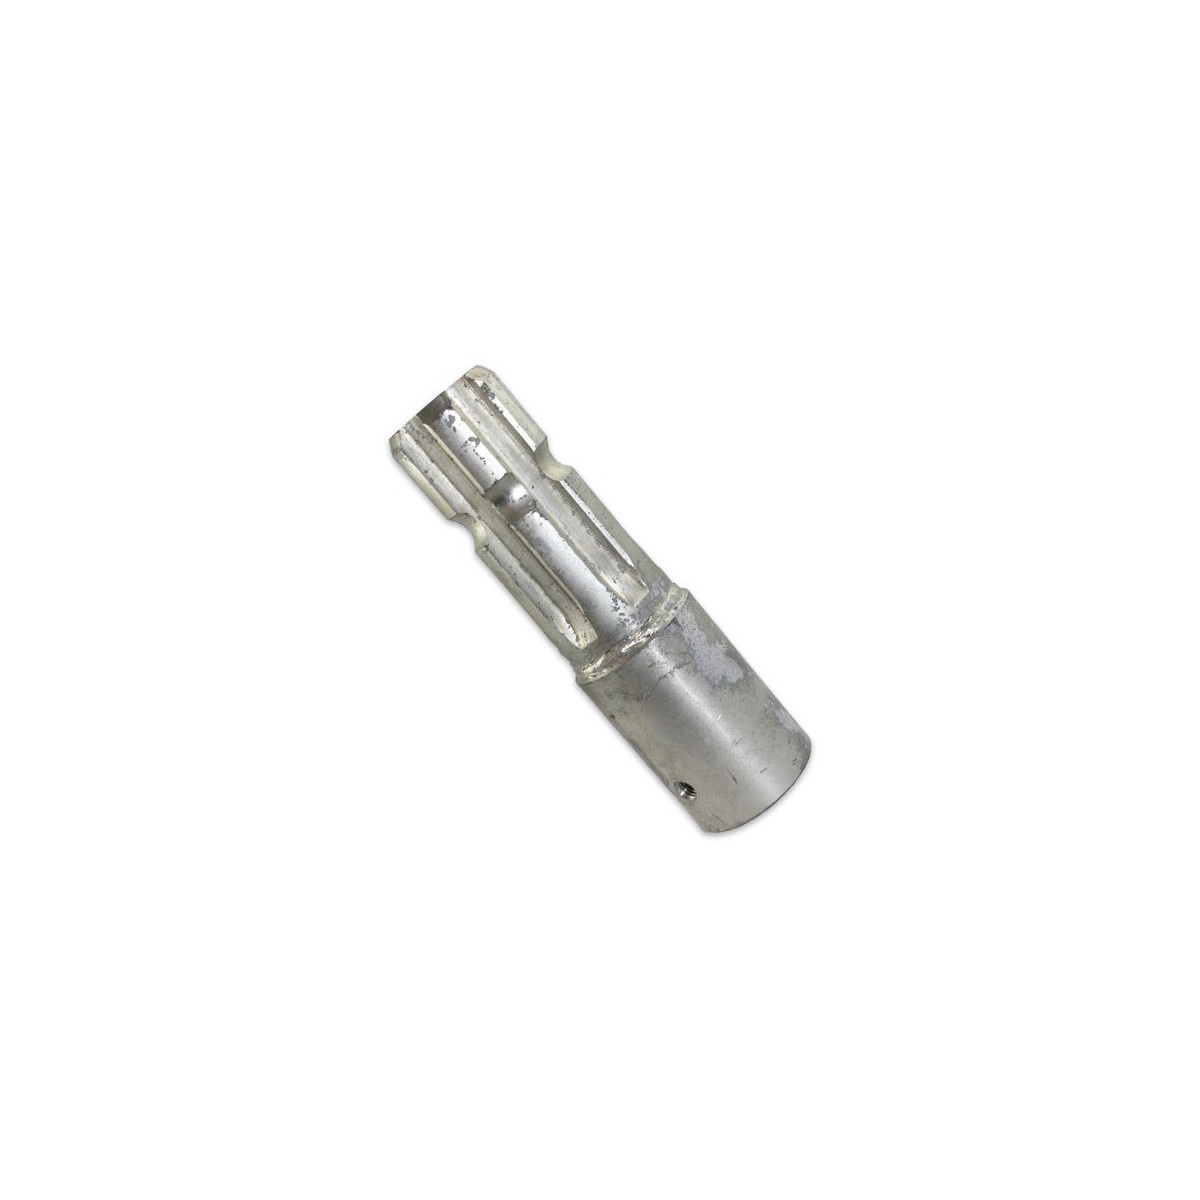 akcesoria wom - Łącznik Adapter 1 3/8"(35mm) 6Tx 1 3/4(45mm)"6T 35x44  mufaxczop